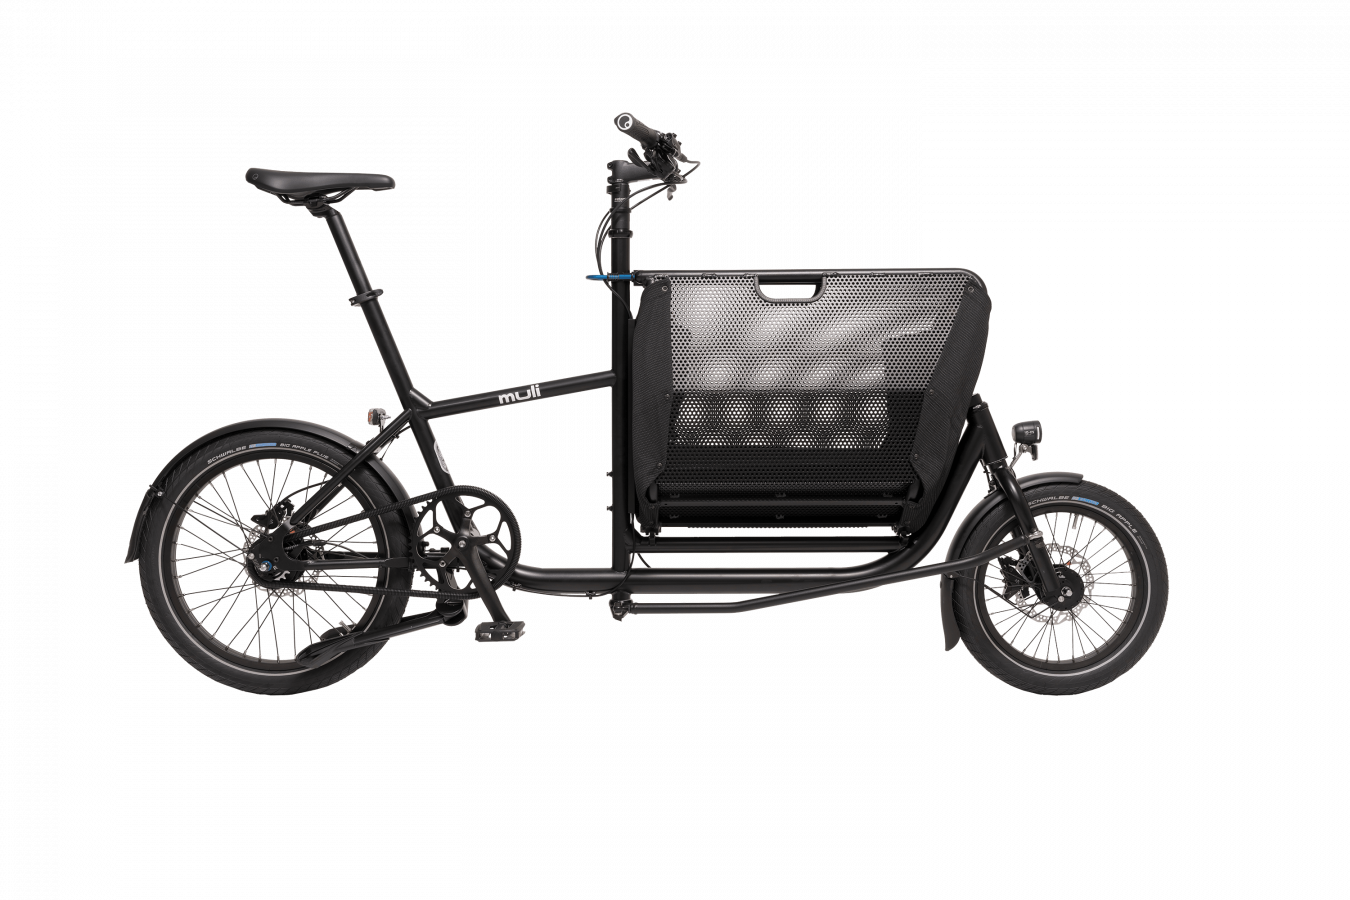 Muli Muscle Belt drive Alfine 8 Dynamo Lights - Compact Cargo Bike